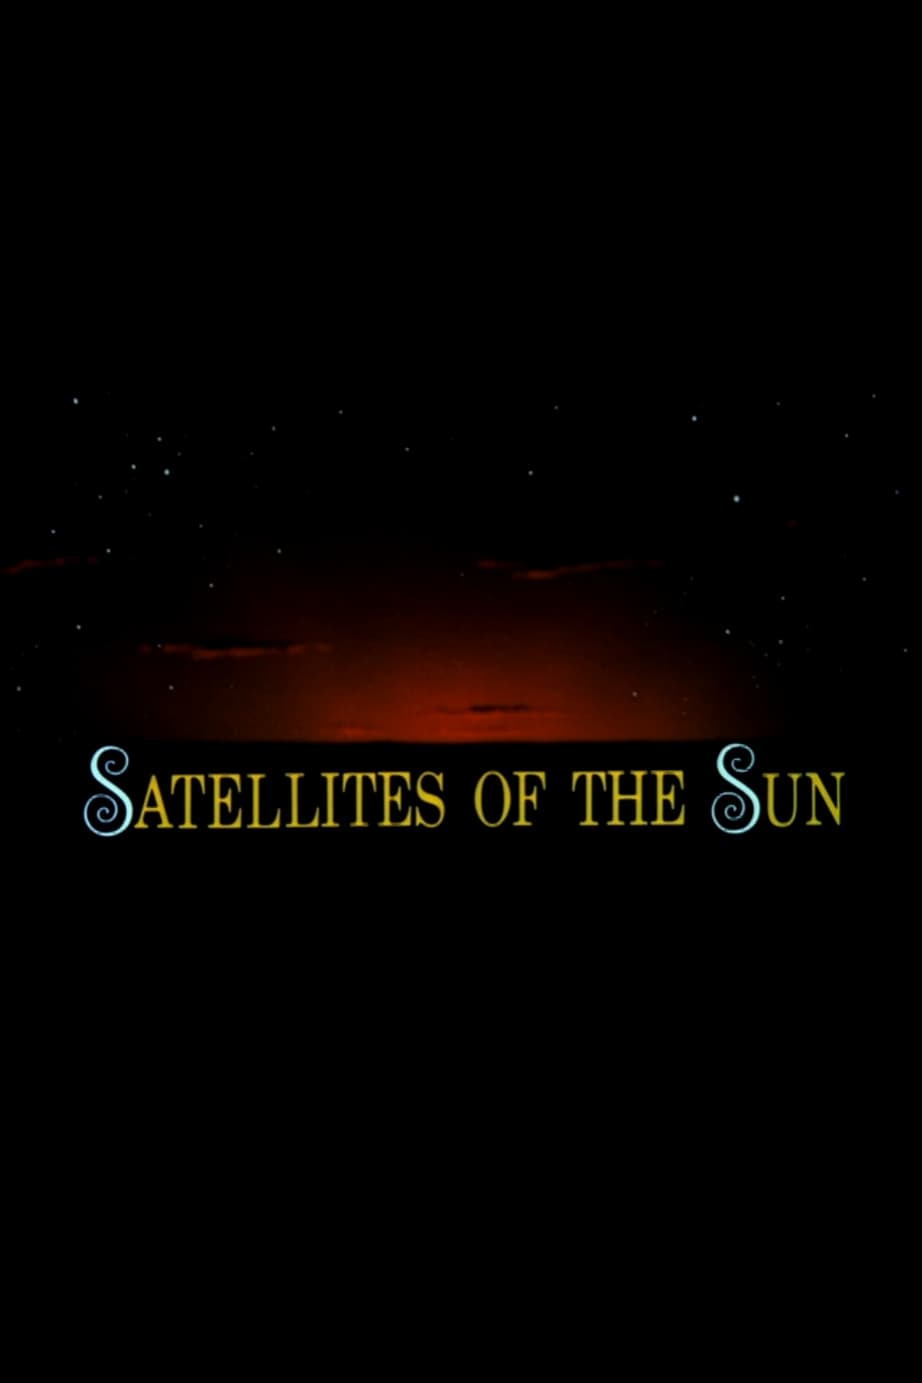 Satellites of the Sun